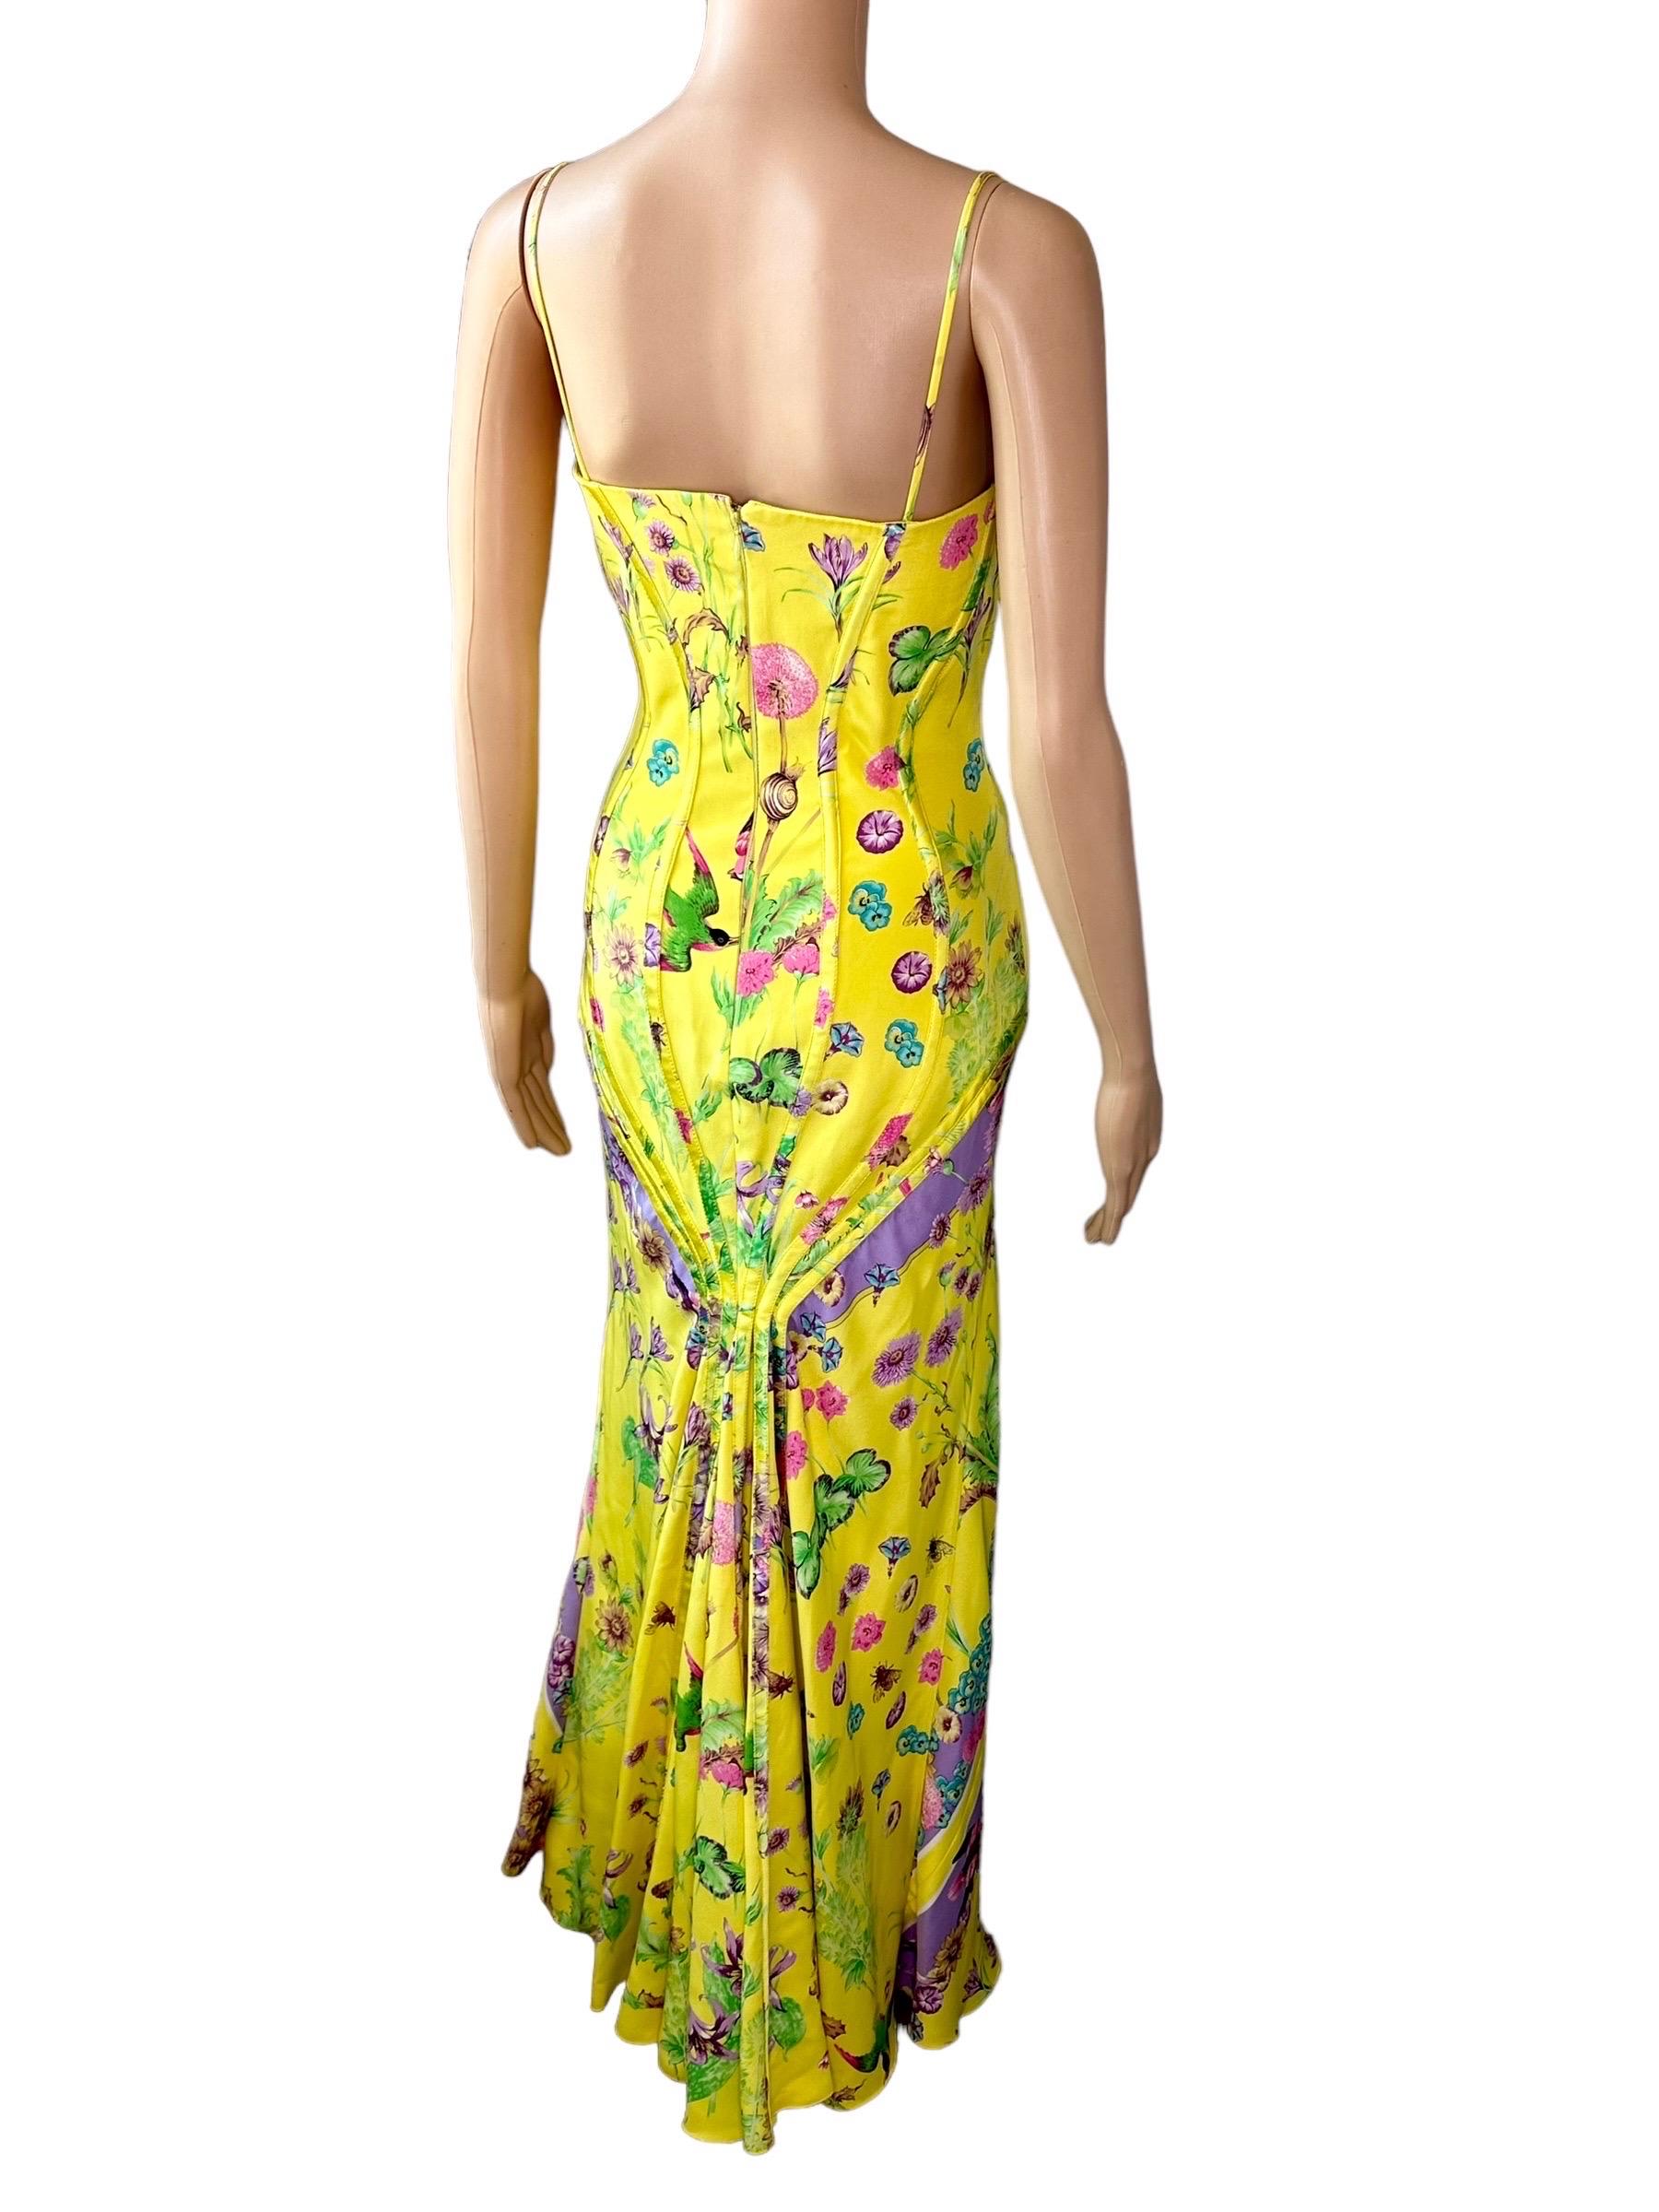 Versace S/S 2006 Bustier Corset Floral Print Evening Dress Gown 4